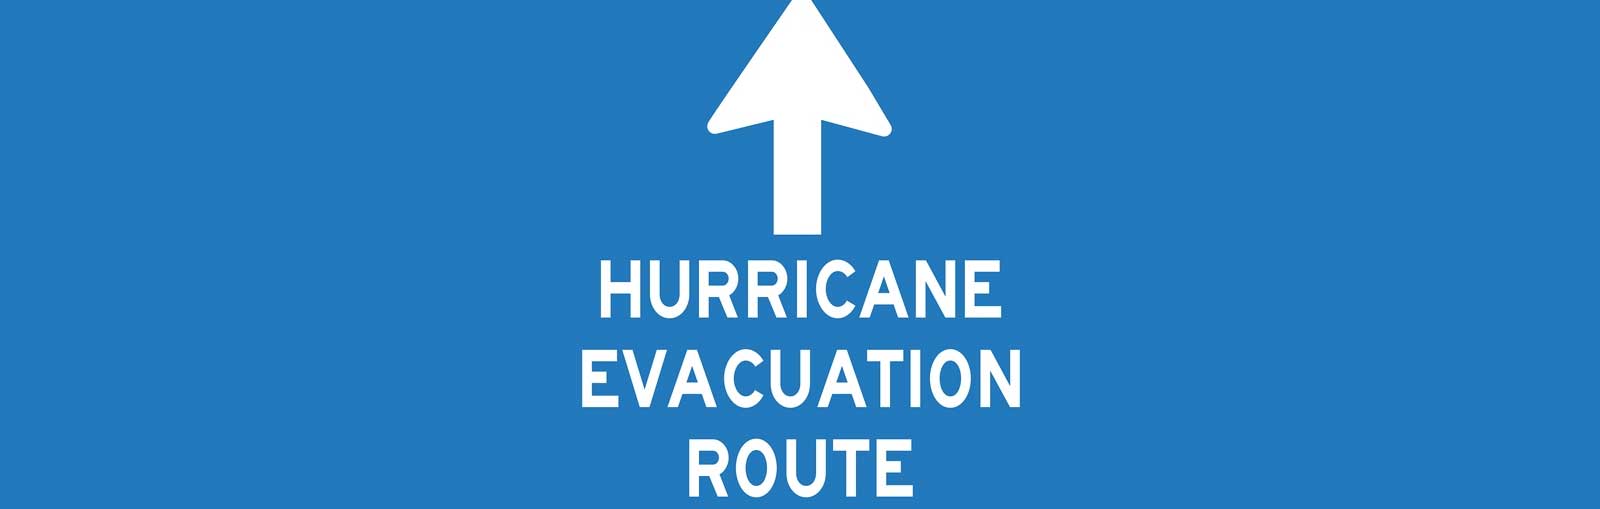 Hurricane Evacuation Route | Knauf-Koenig Group - Naples, Florida General Contractor